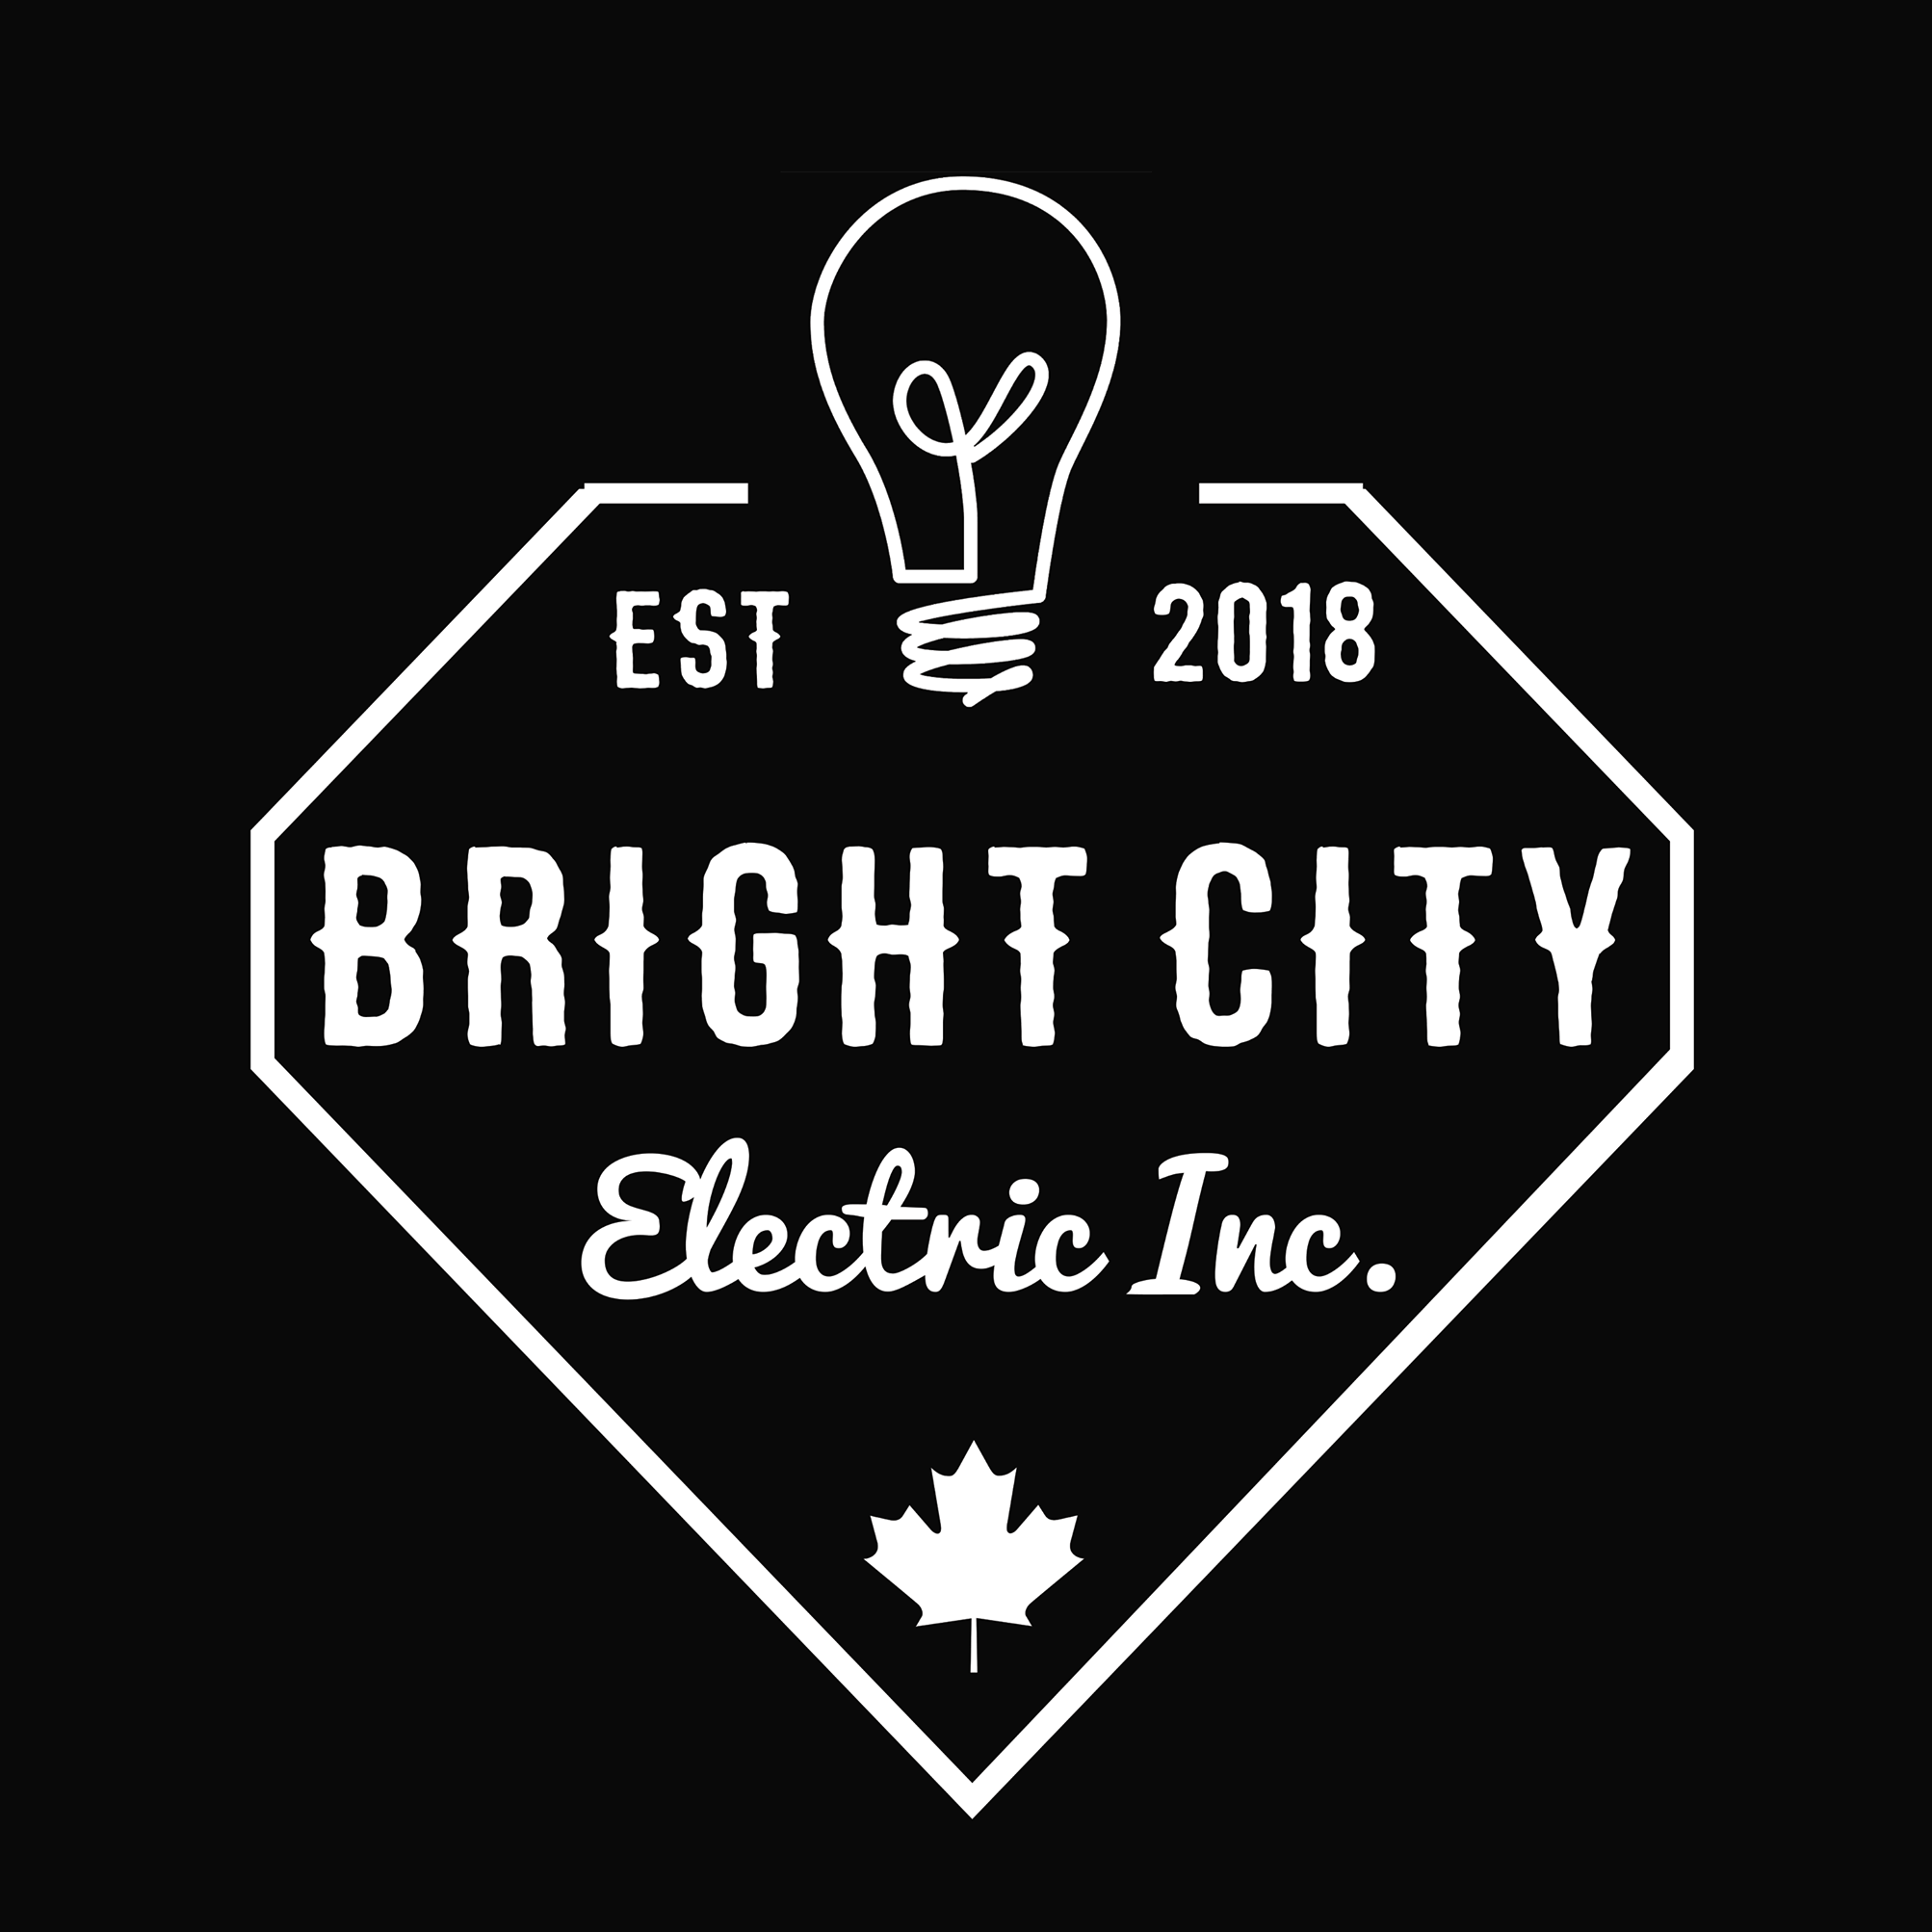 Bright City Electric Inc. 19381 119b Ave, Pitt Meadows British Columbia V3Y 1J9